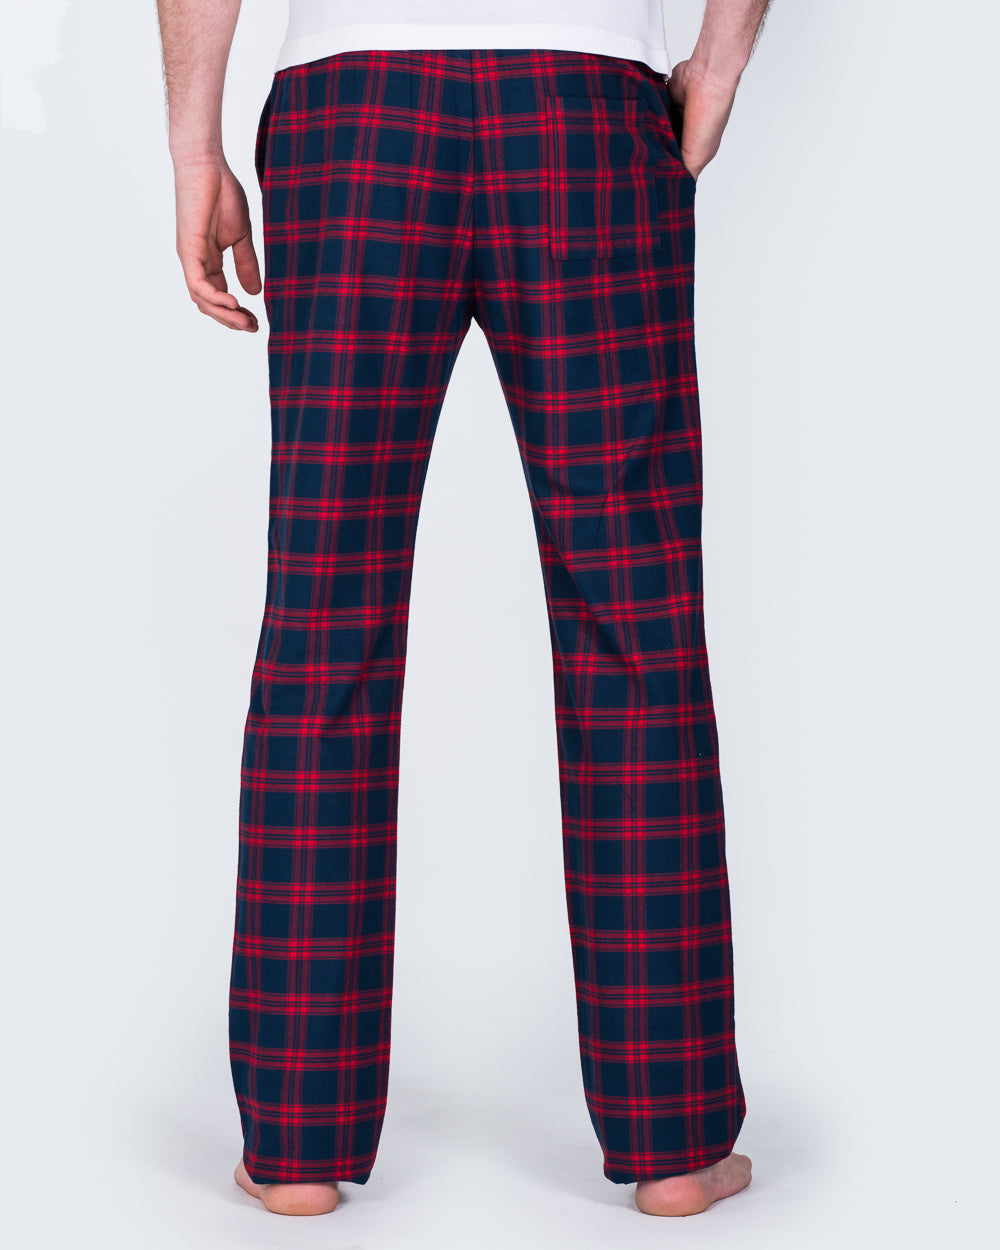 2t Tall Slim Fit Pyjama Bottoms (navy/red)